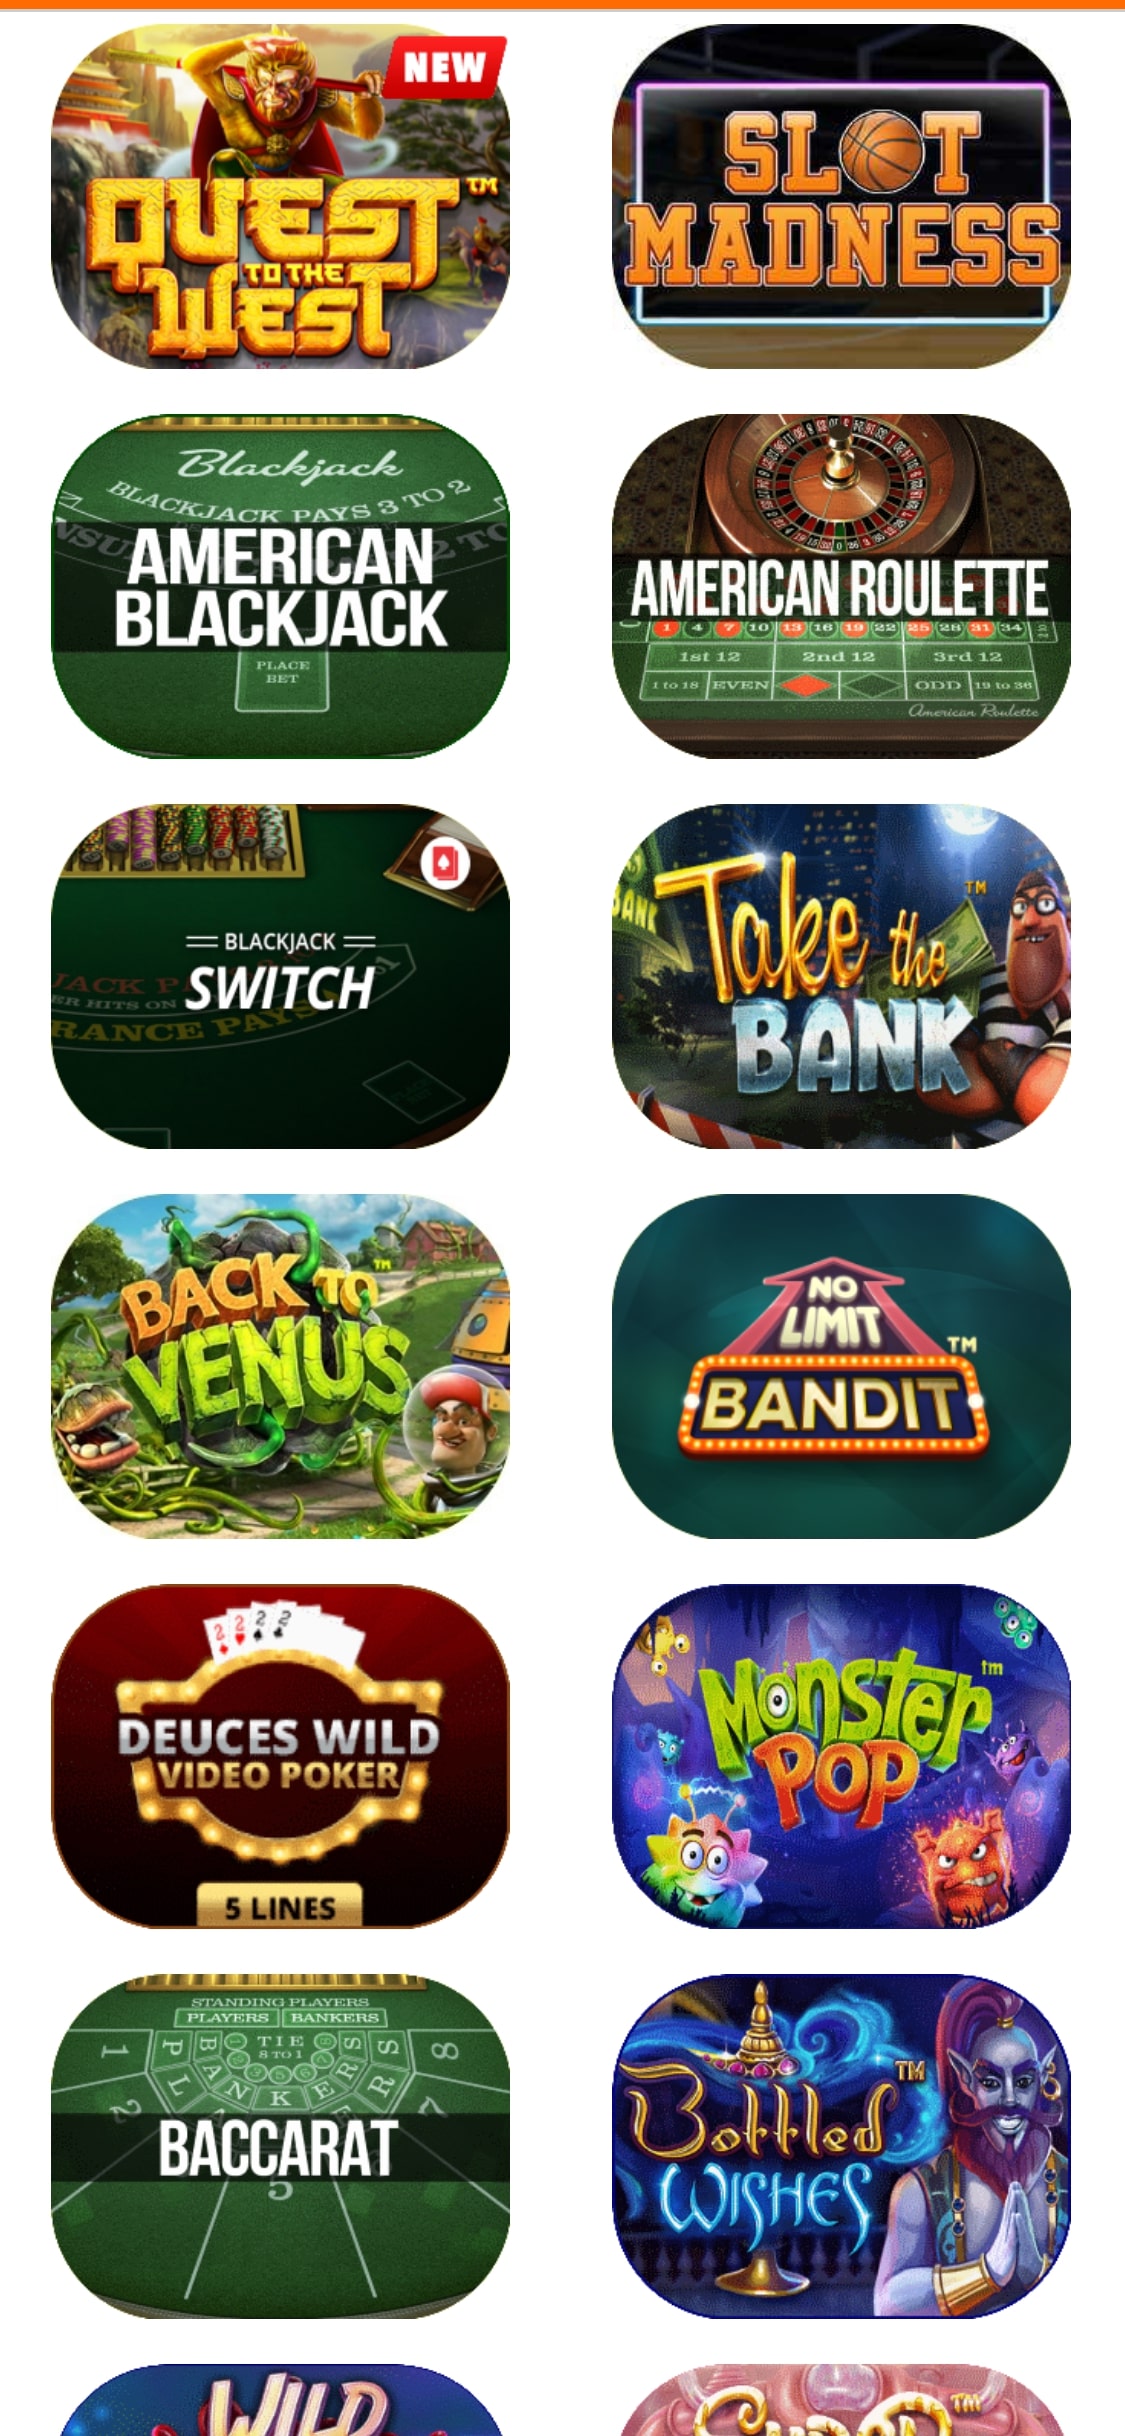 TigerGaming Casino Mobile Games Review